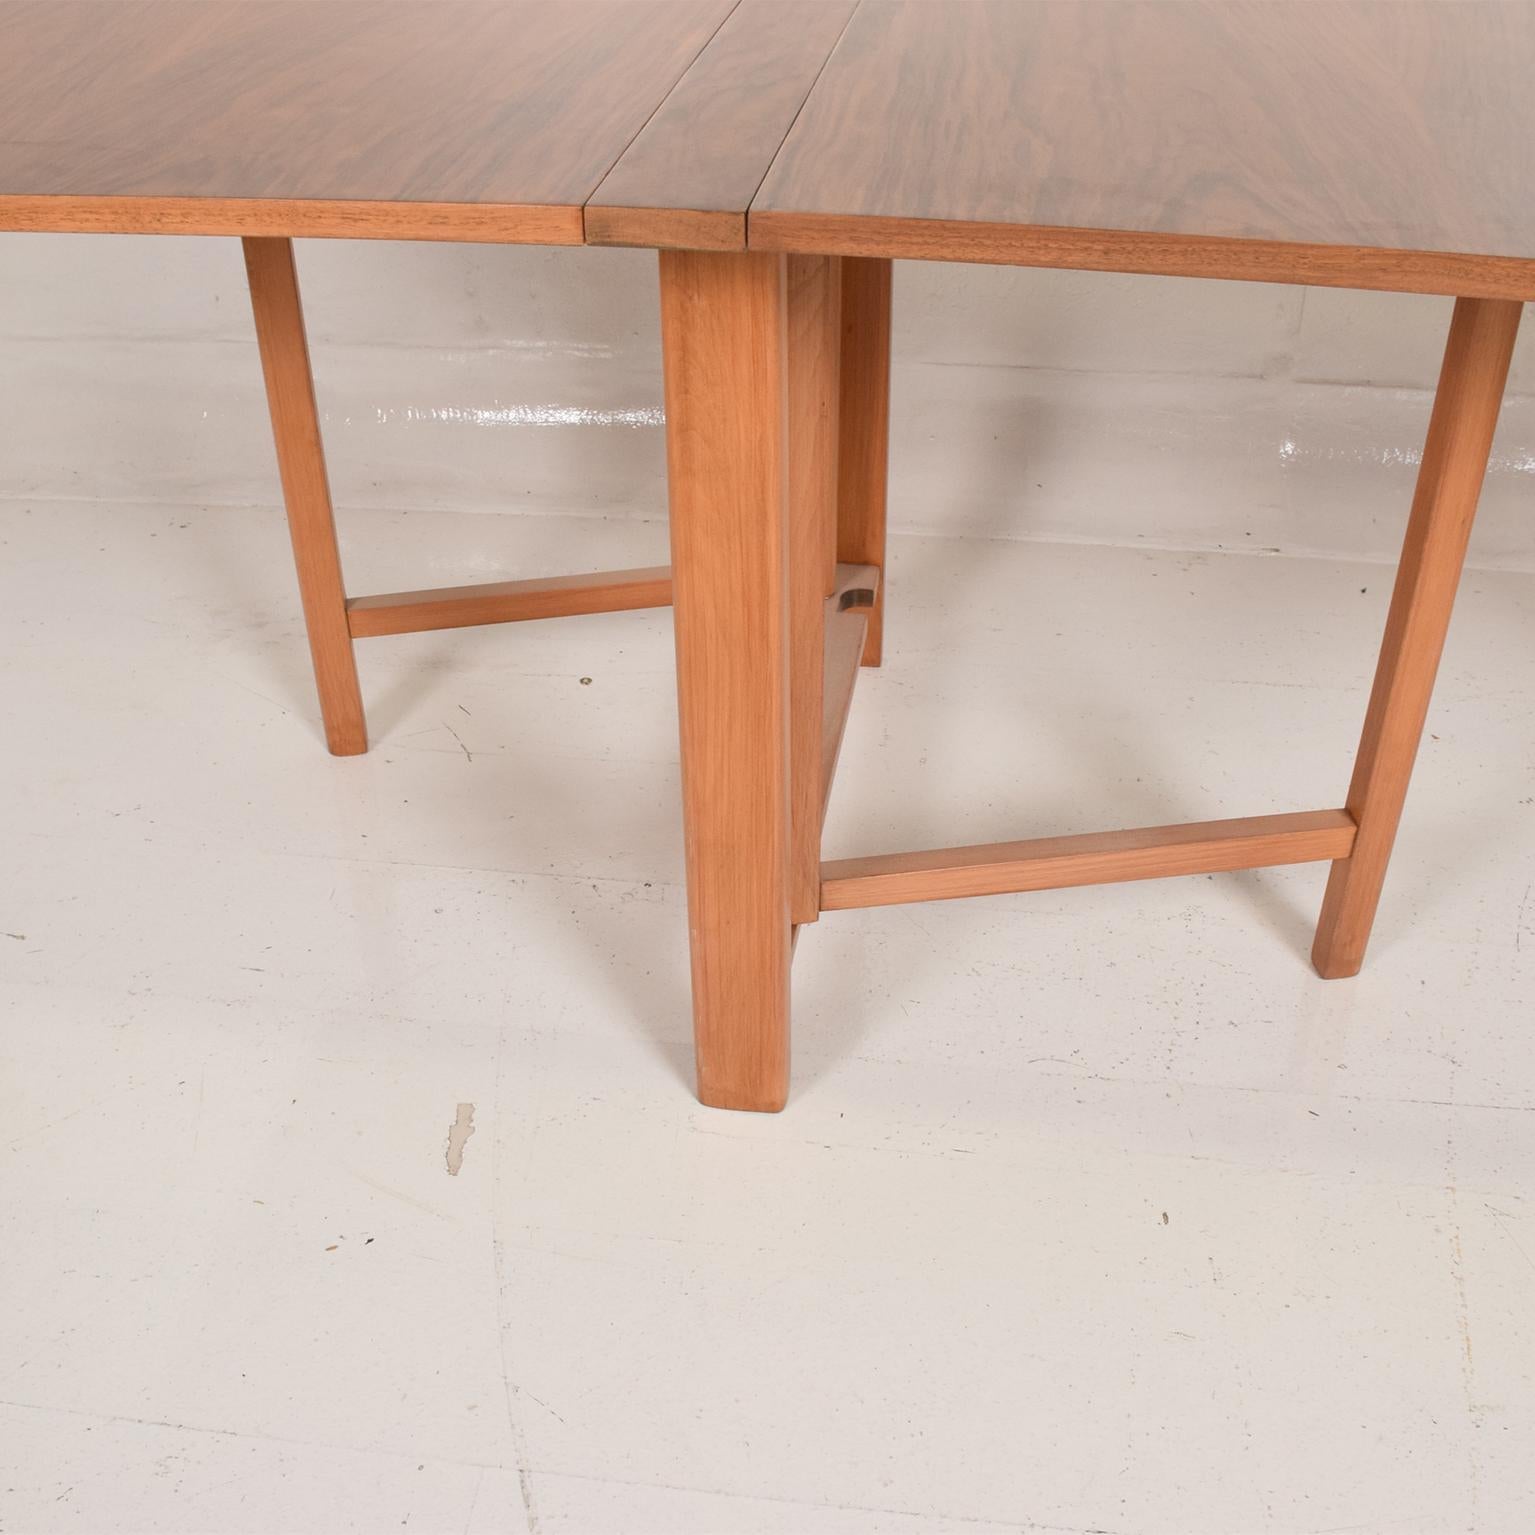 Lacquered Midcentury Danish Modern Maria Table, Bruno Mathsson Scandinavian Modern